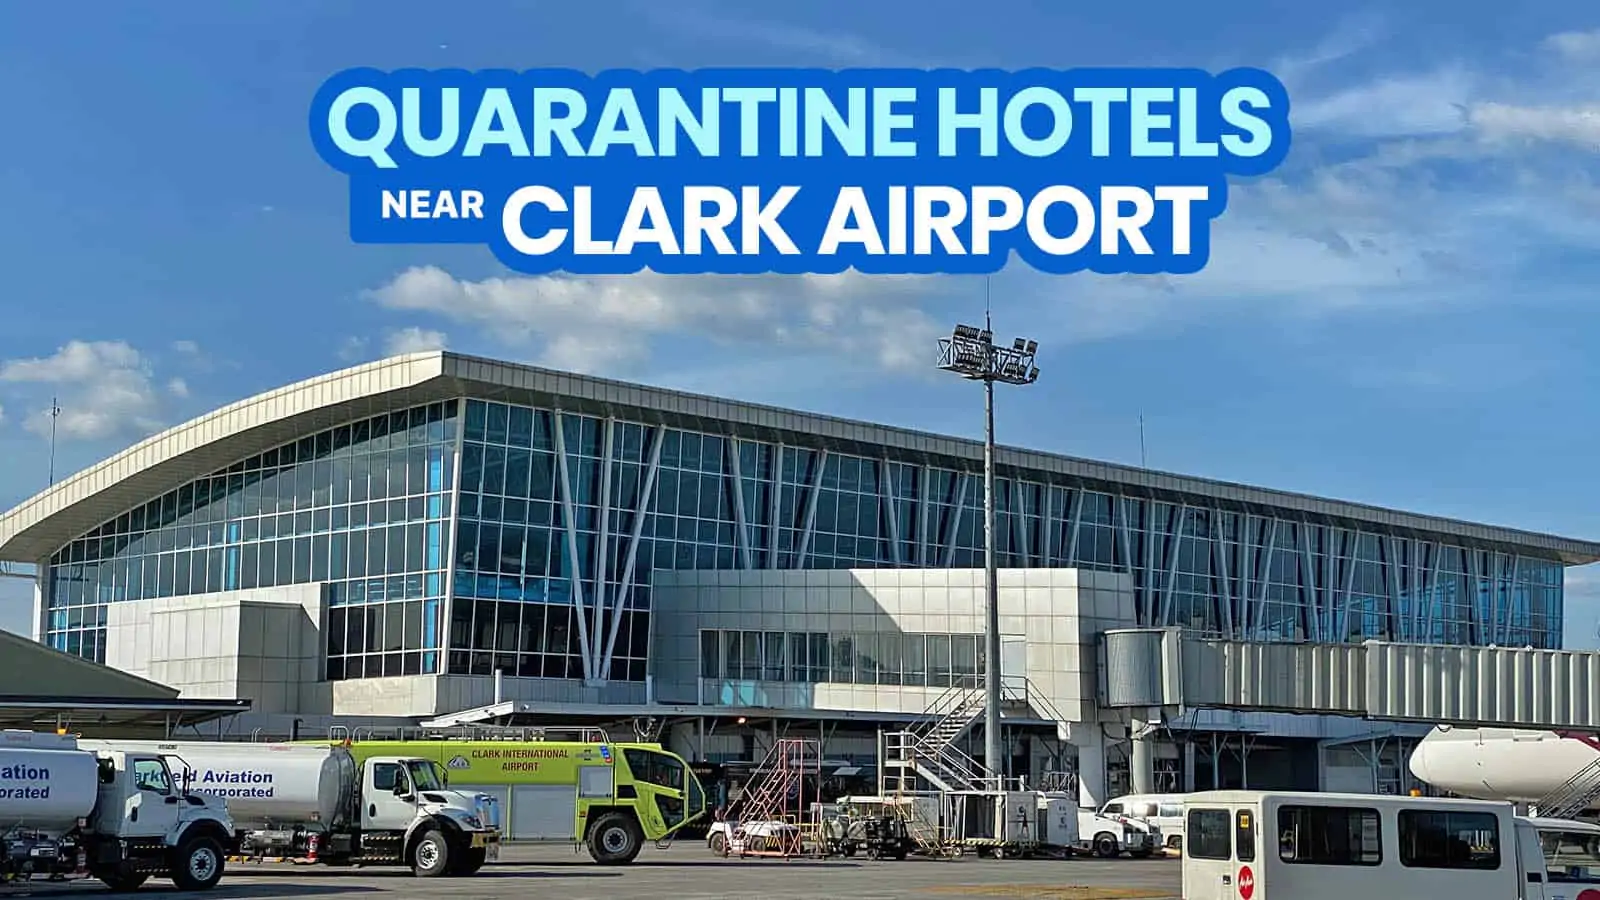 Clark机场附近的DOH-BOQ认可的隔离酒店清单